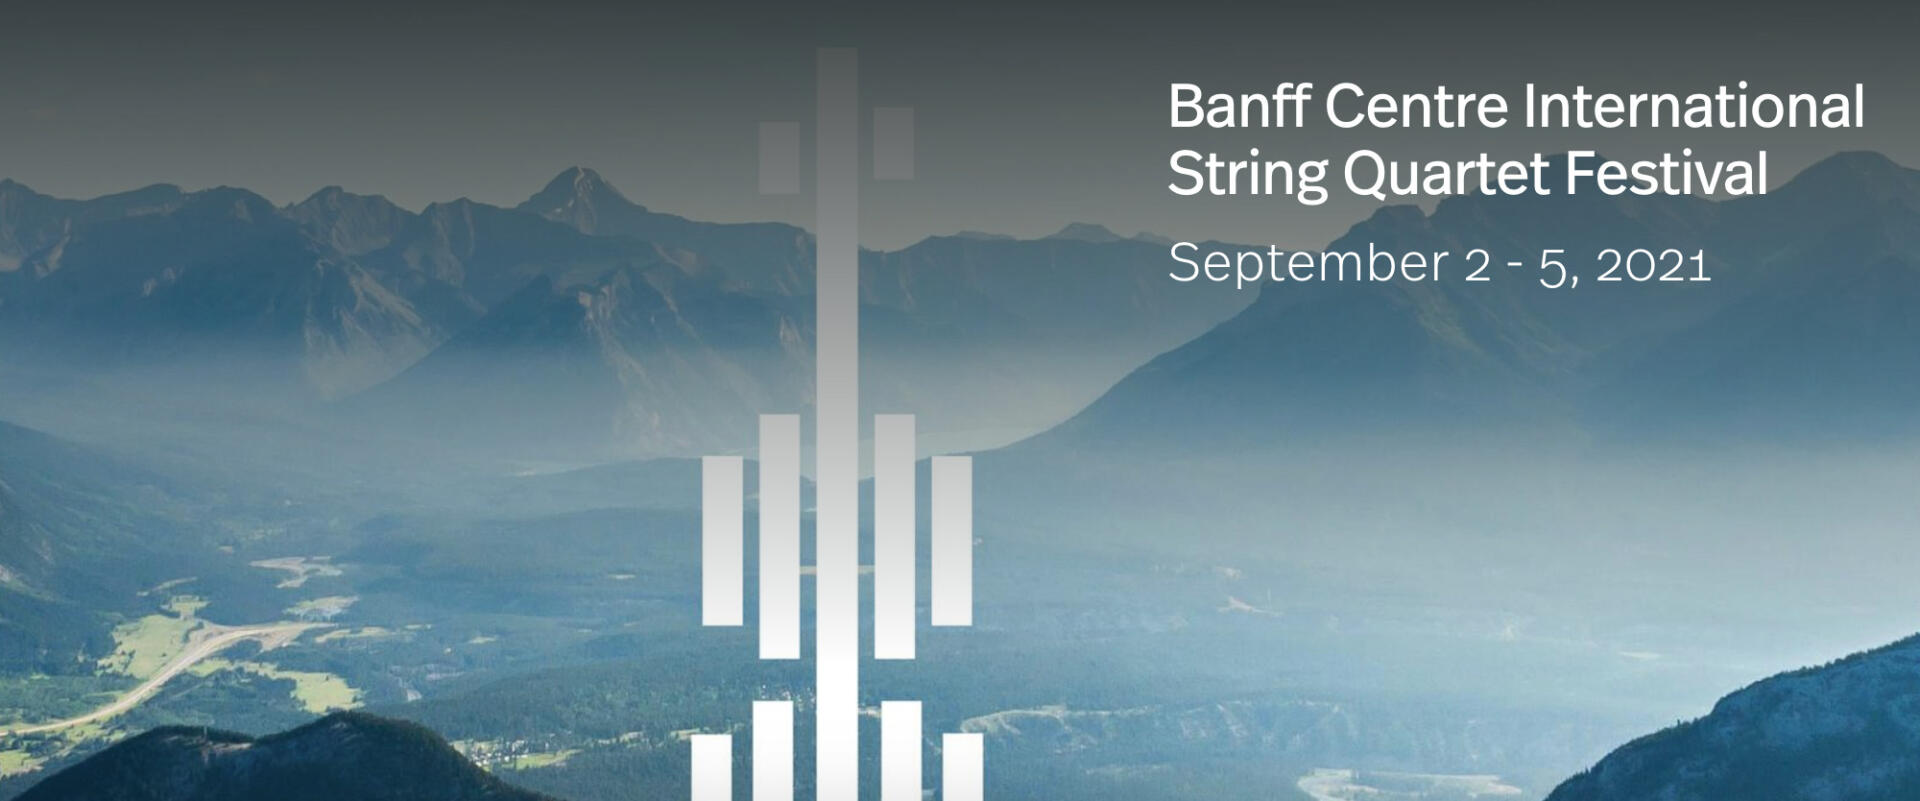 2021 Banff Centre International String Quartet Festival to be Held Online - image attachment